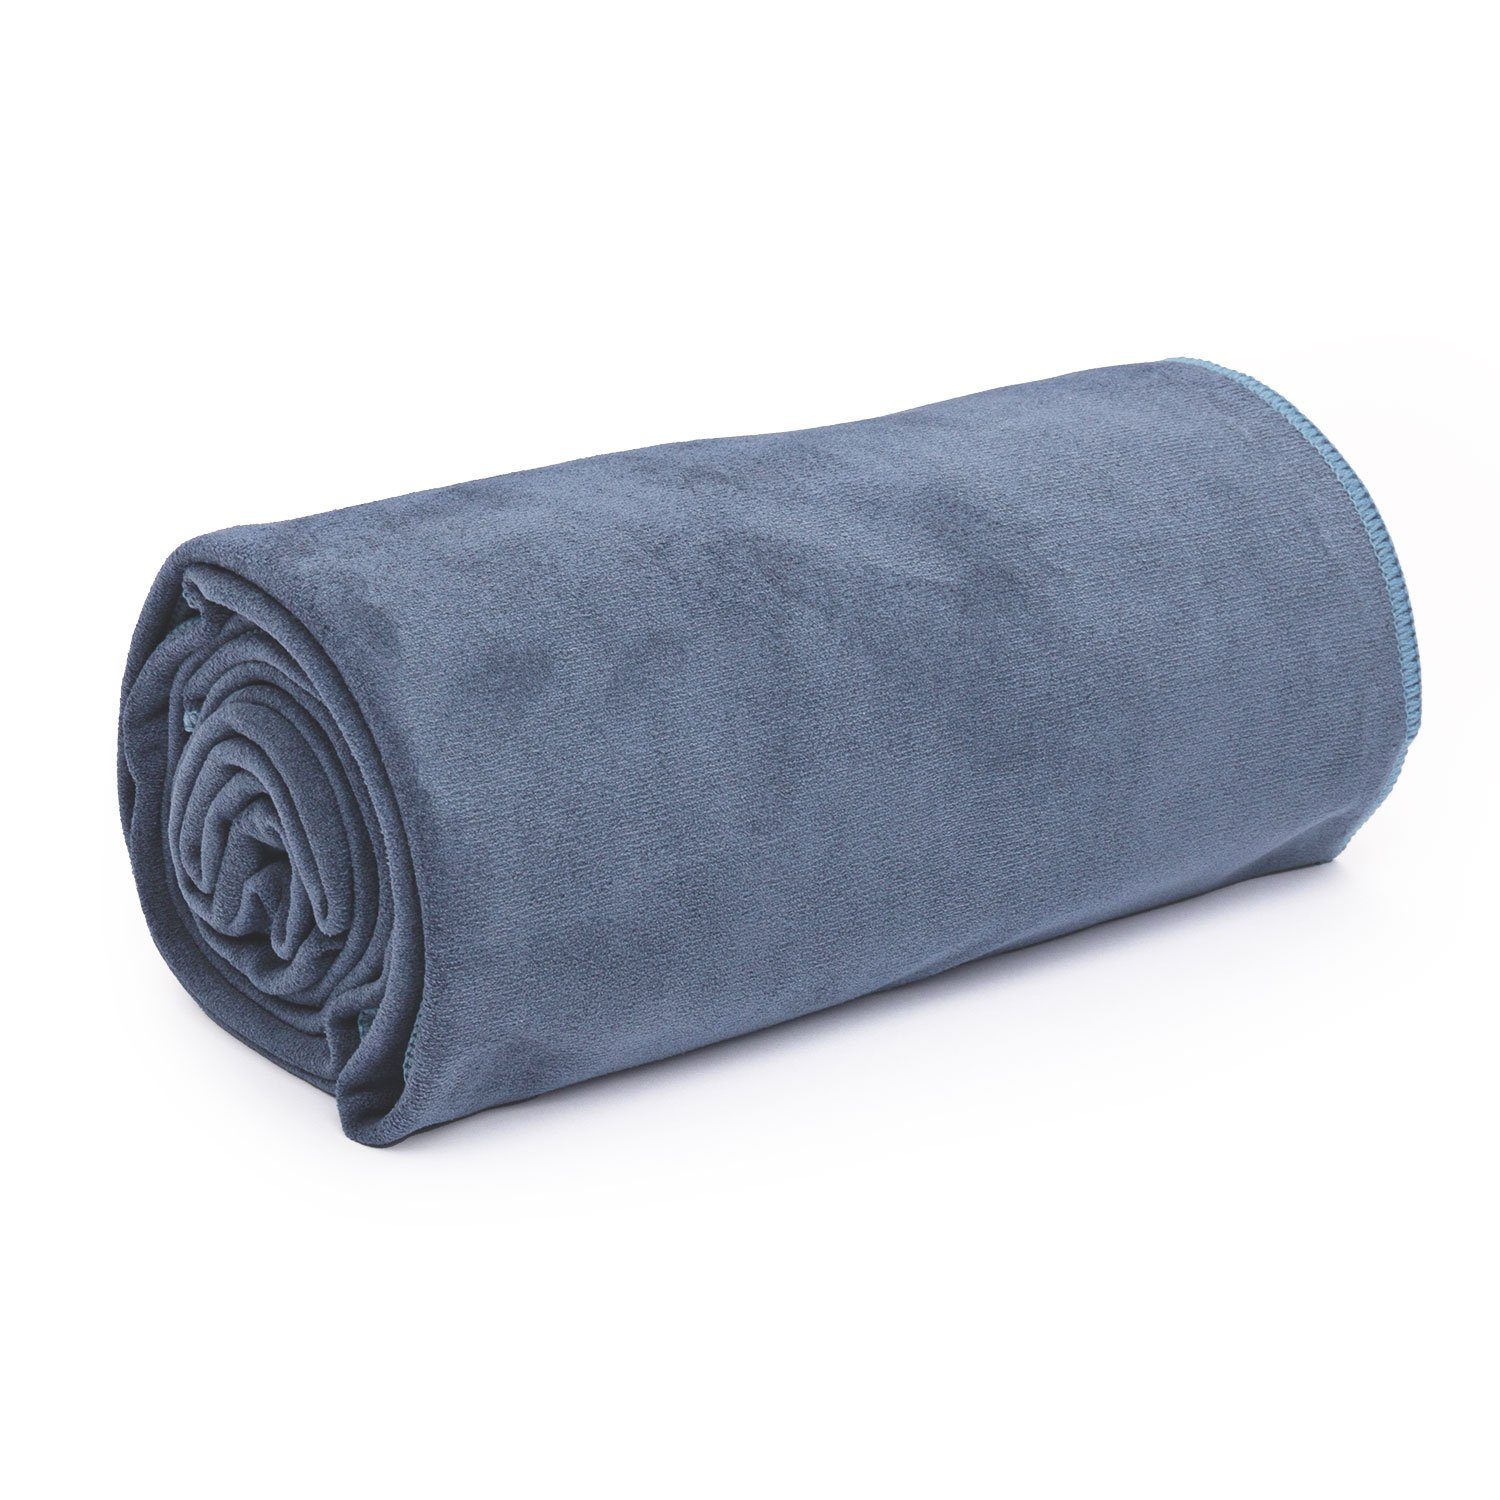 Sporthandtuch blue Yogamattenauflage moonlight Towel FLOW bodhi L